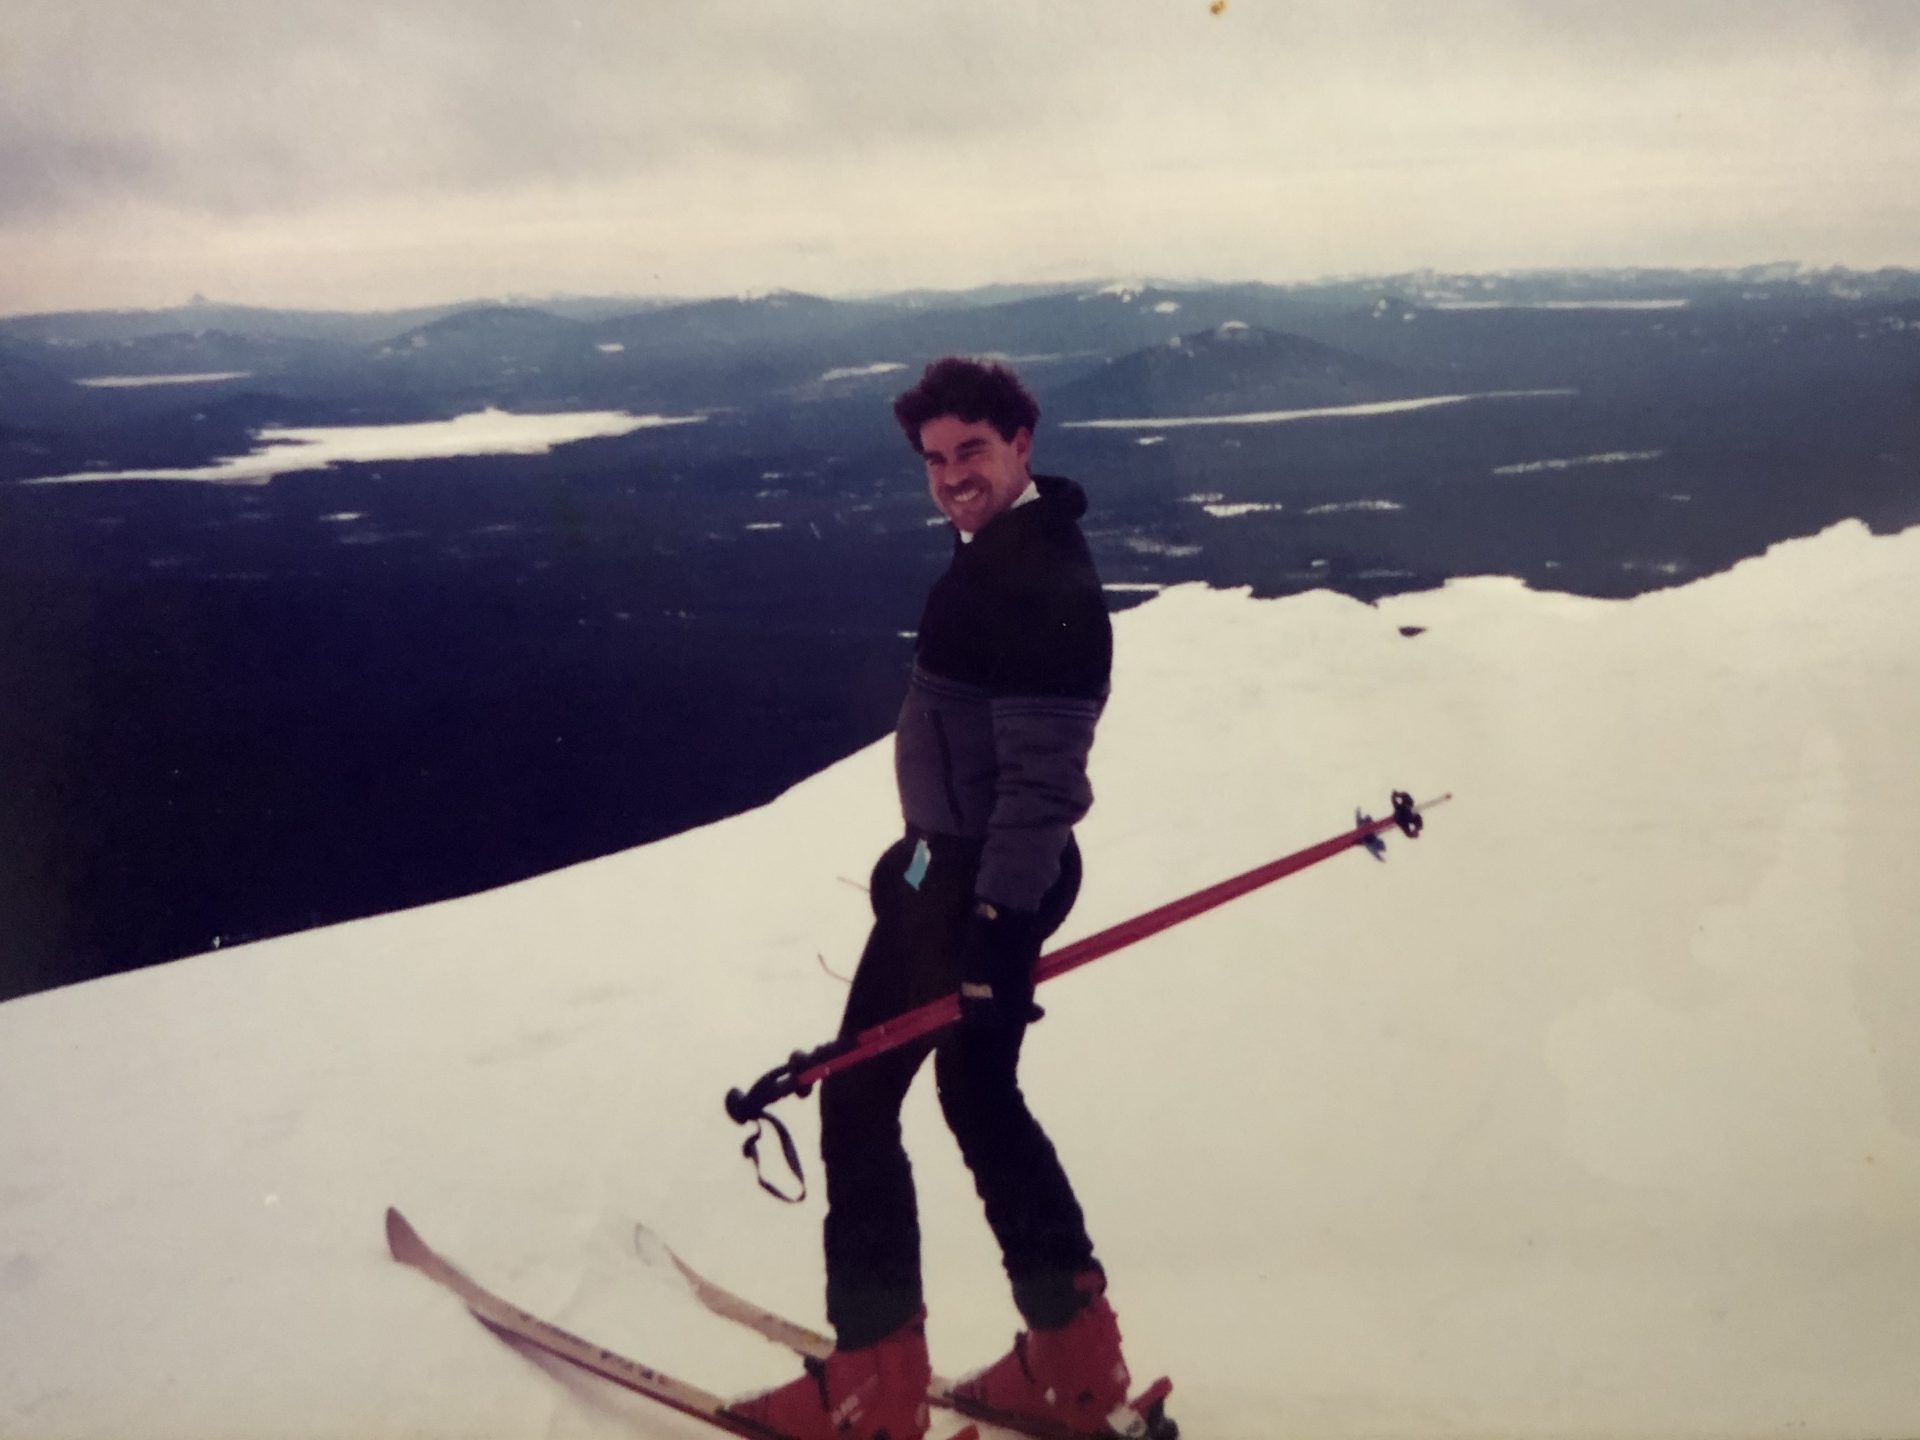 Tom was pretty good skier, he used to be a Sky teacher for kids.